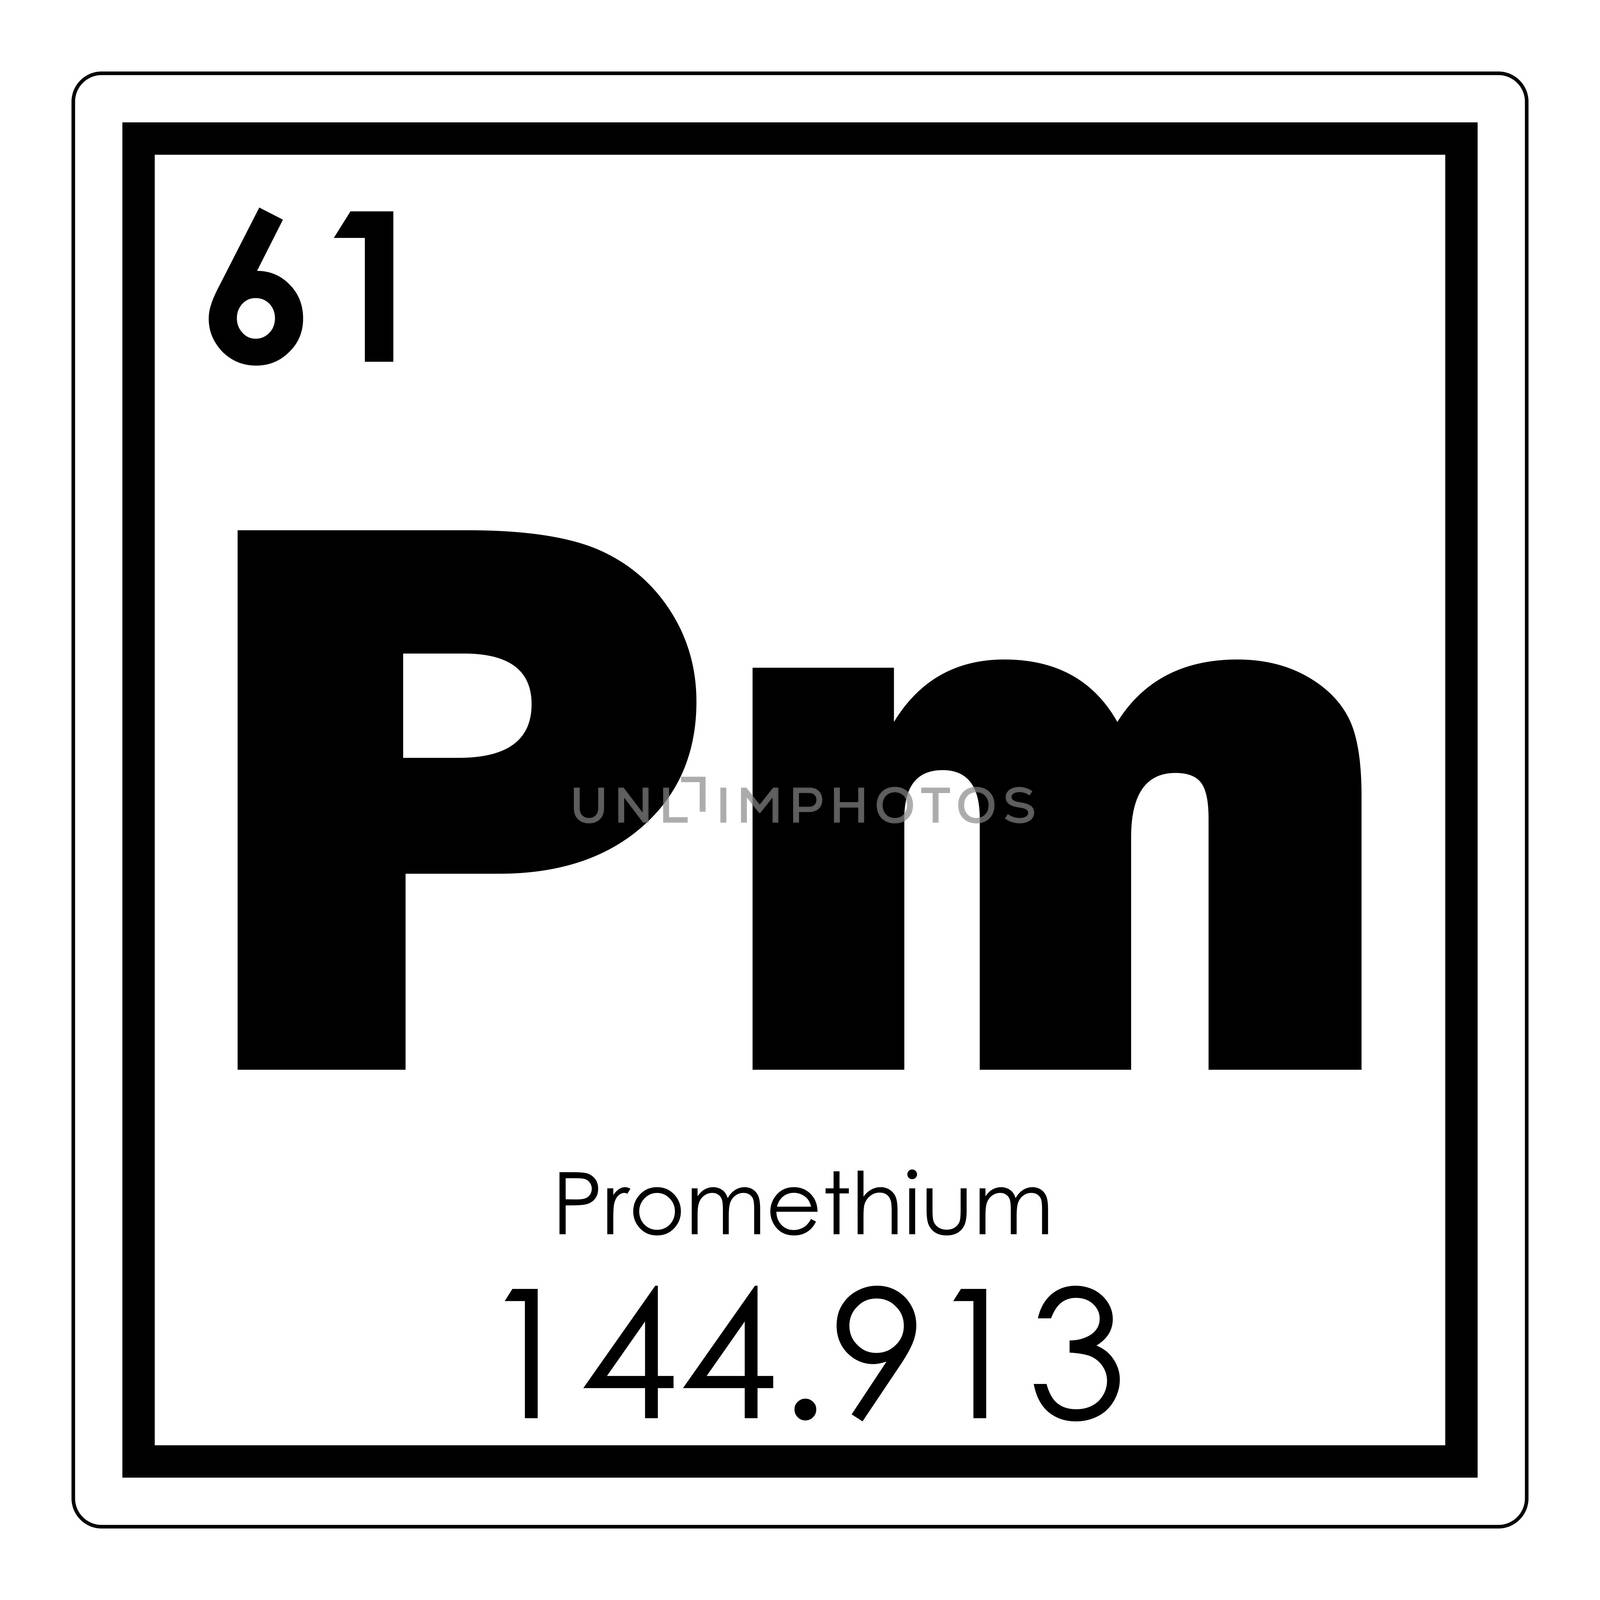 Promethium chemical element by tony4urban